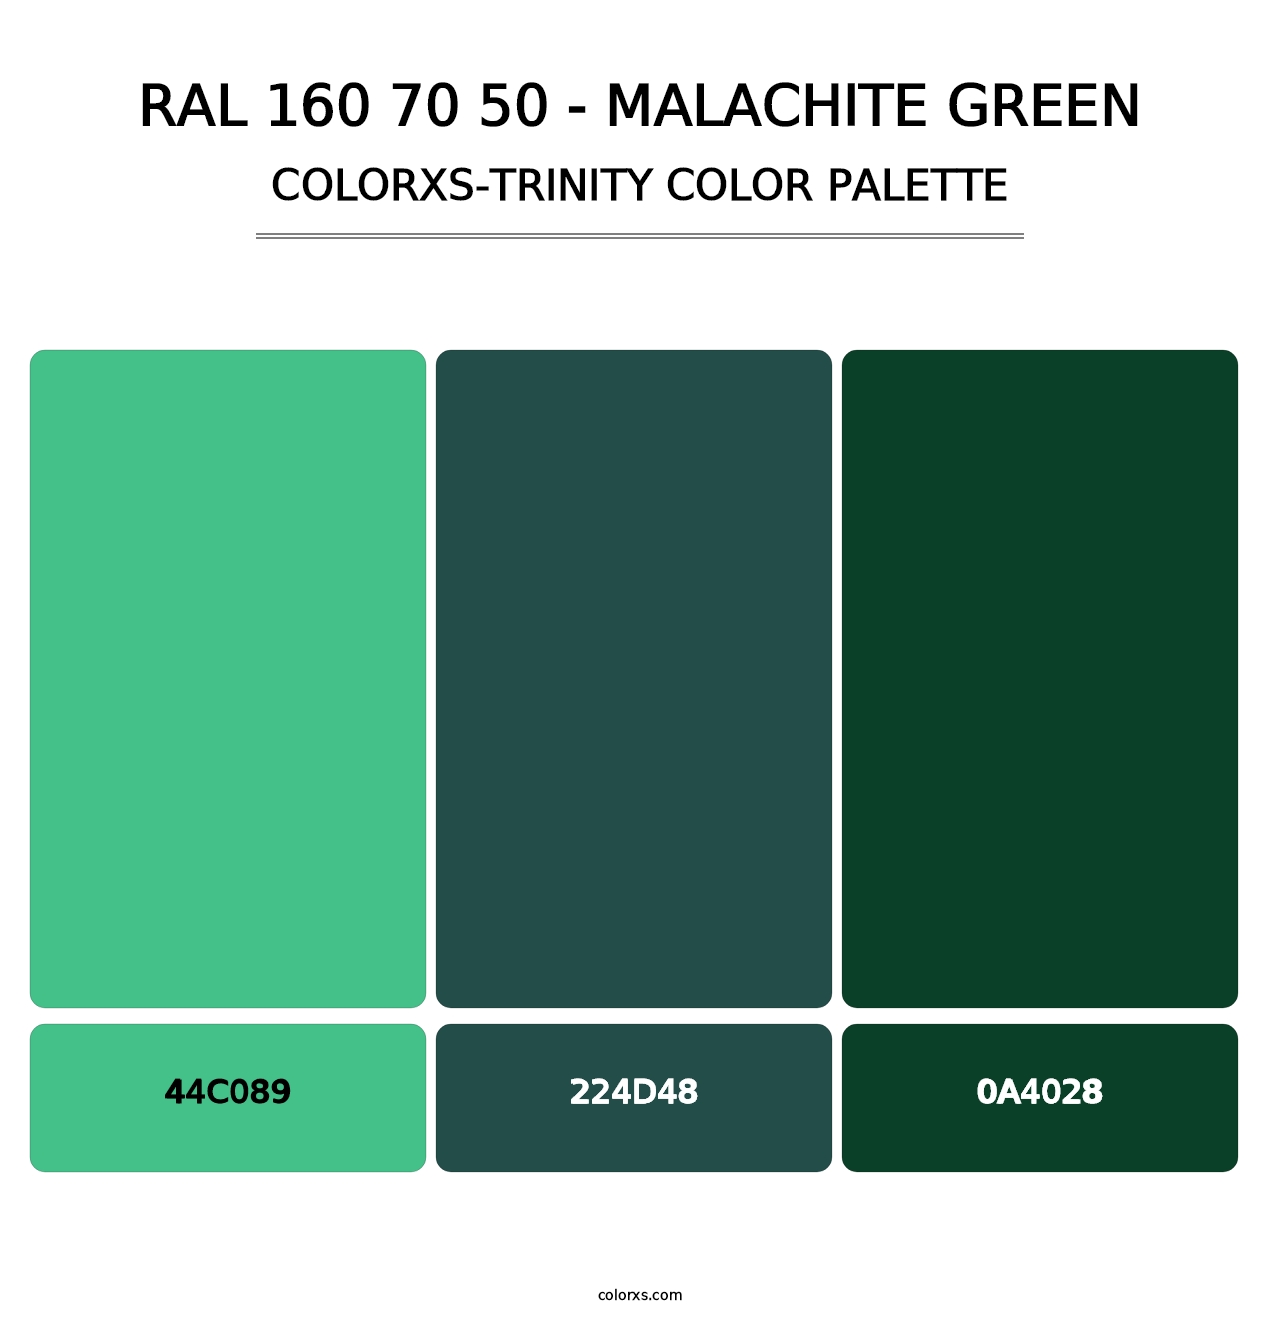 RAL 160 70 50 - Malachite Green - Colorxs Trinity Palette